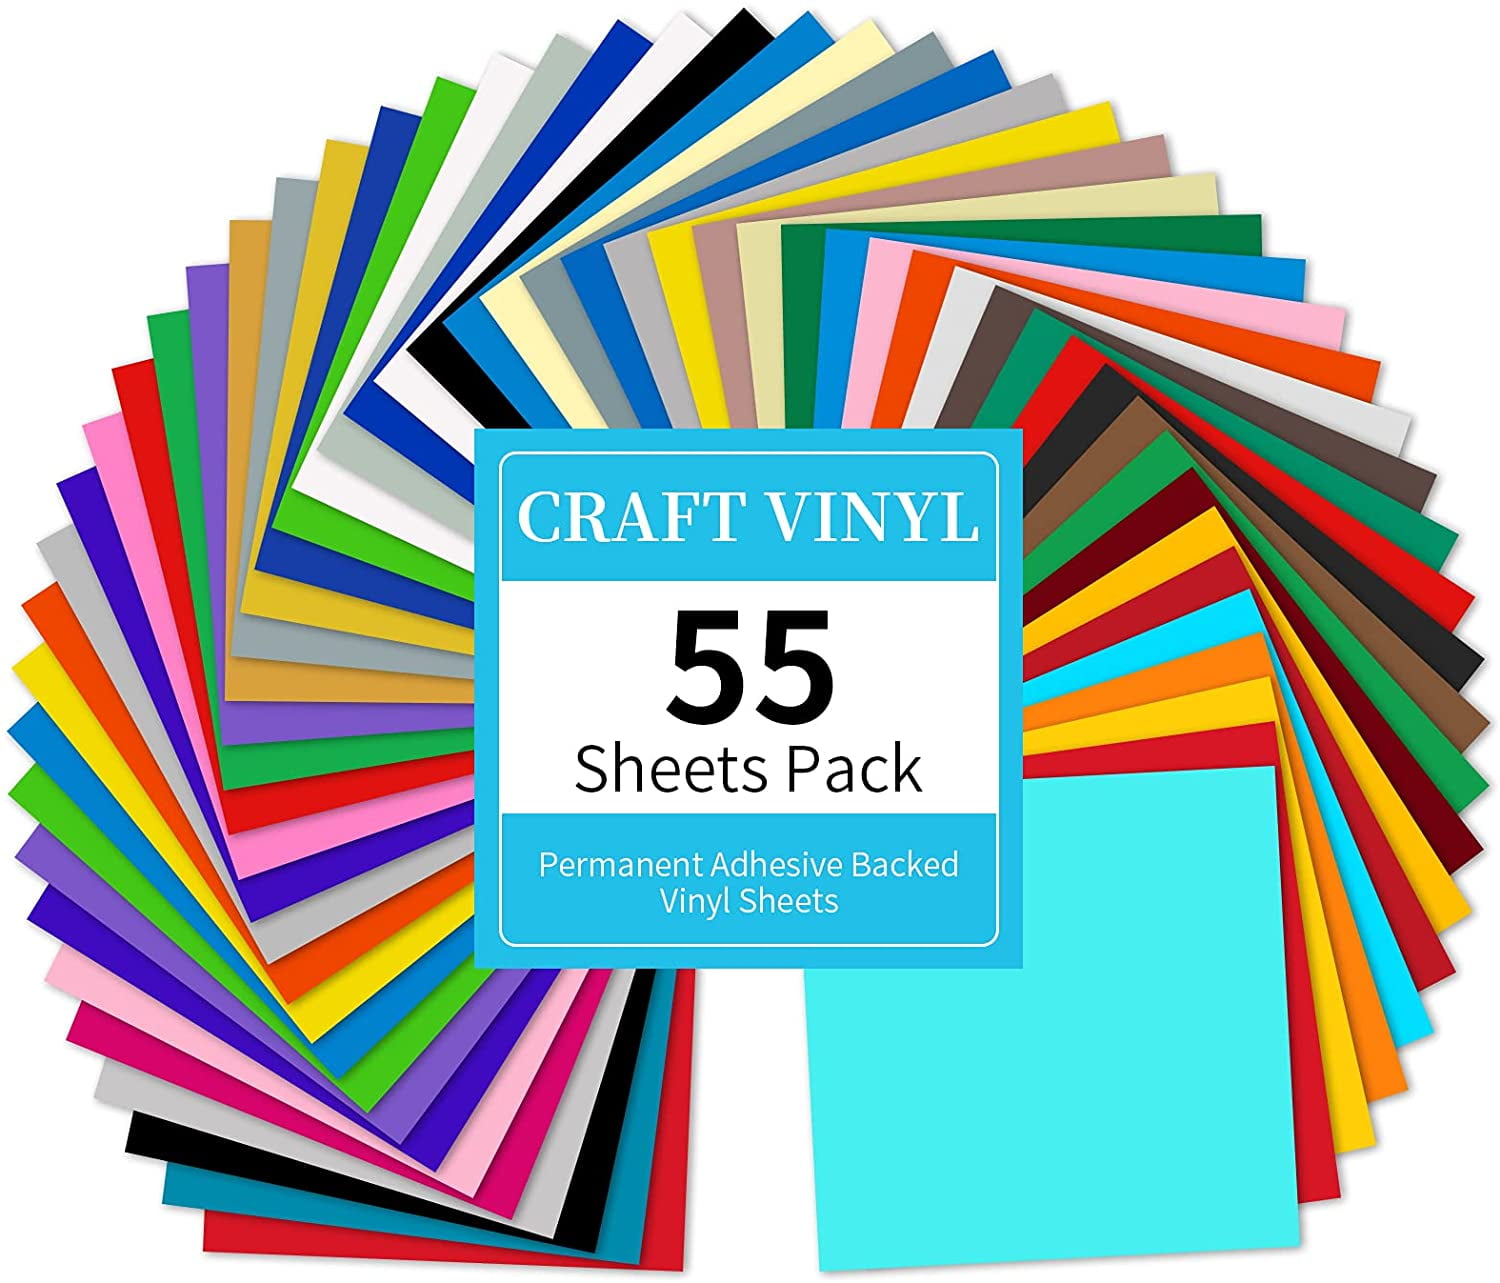 Lya Vinyl 55 Packs Permanent Adhesive Vinyl Sheets for Decor